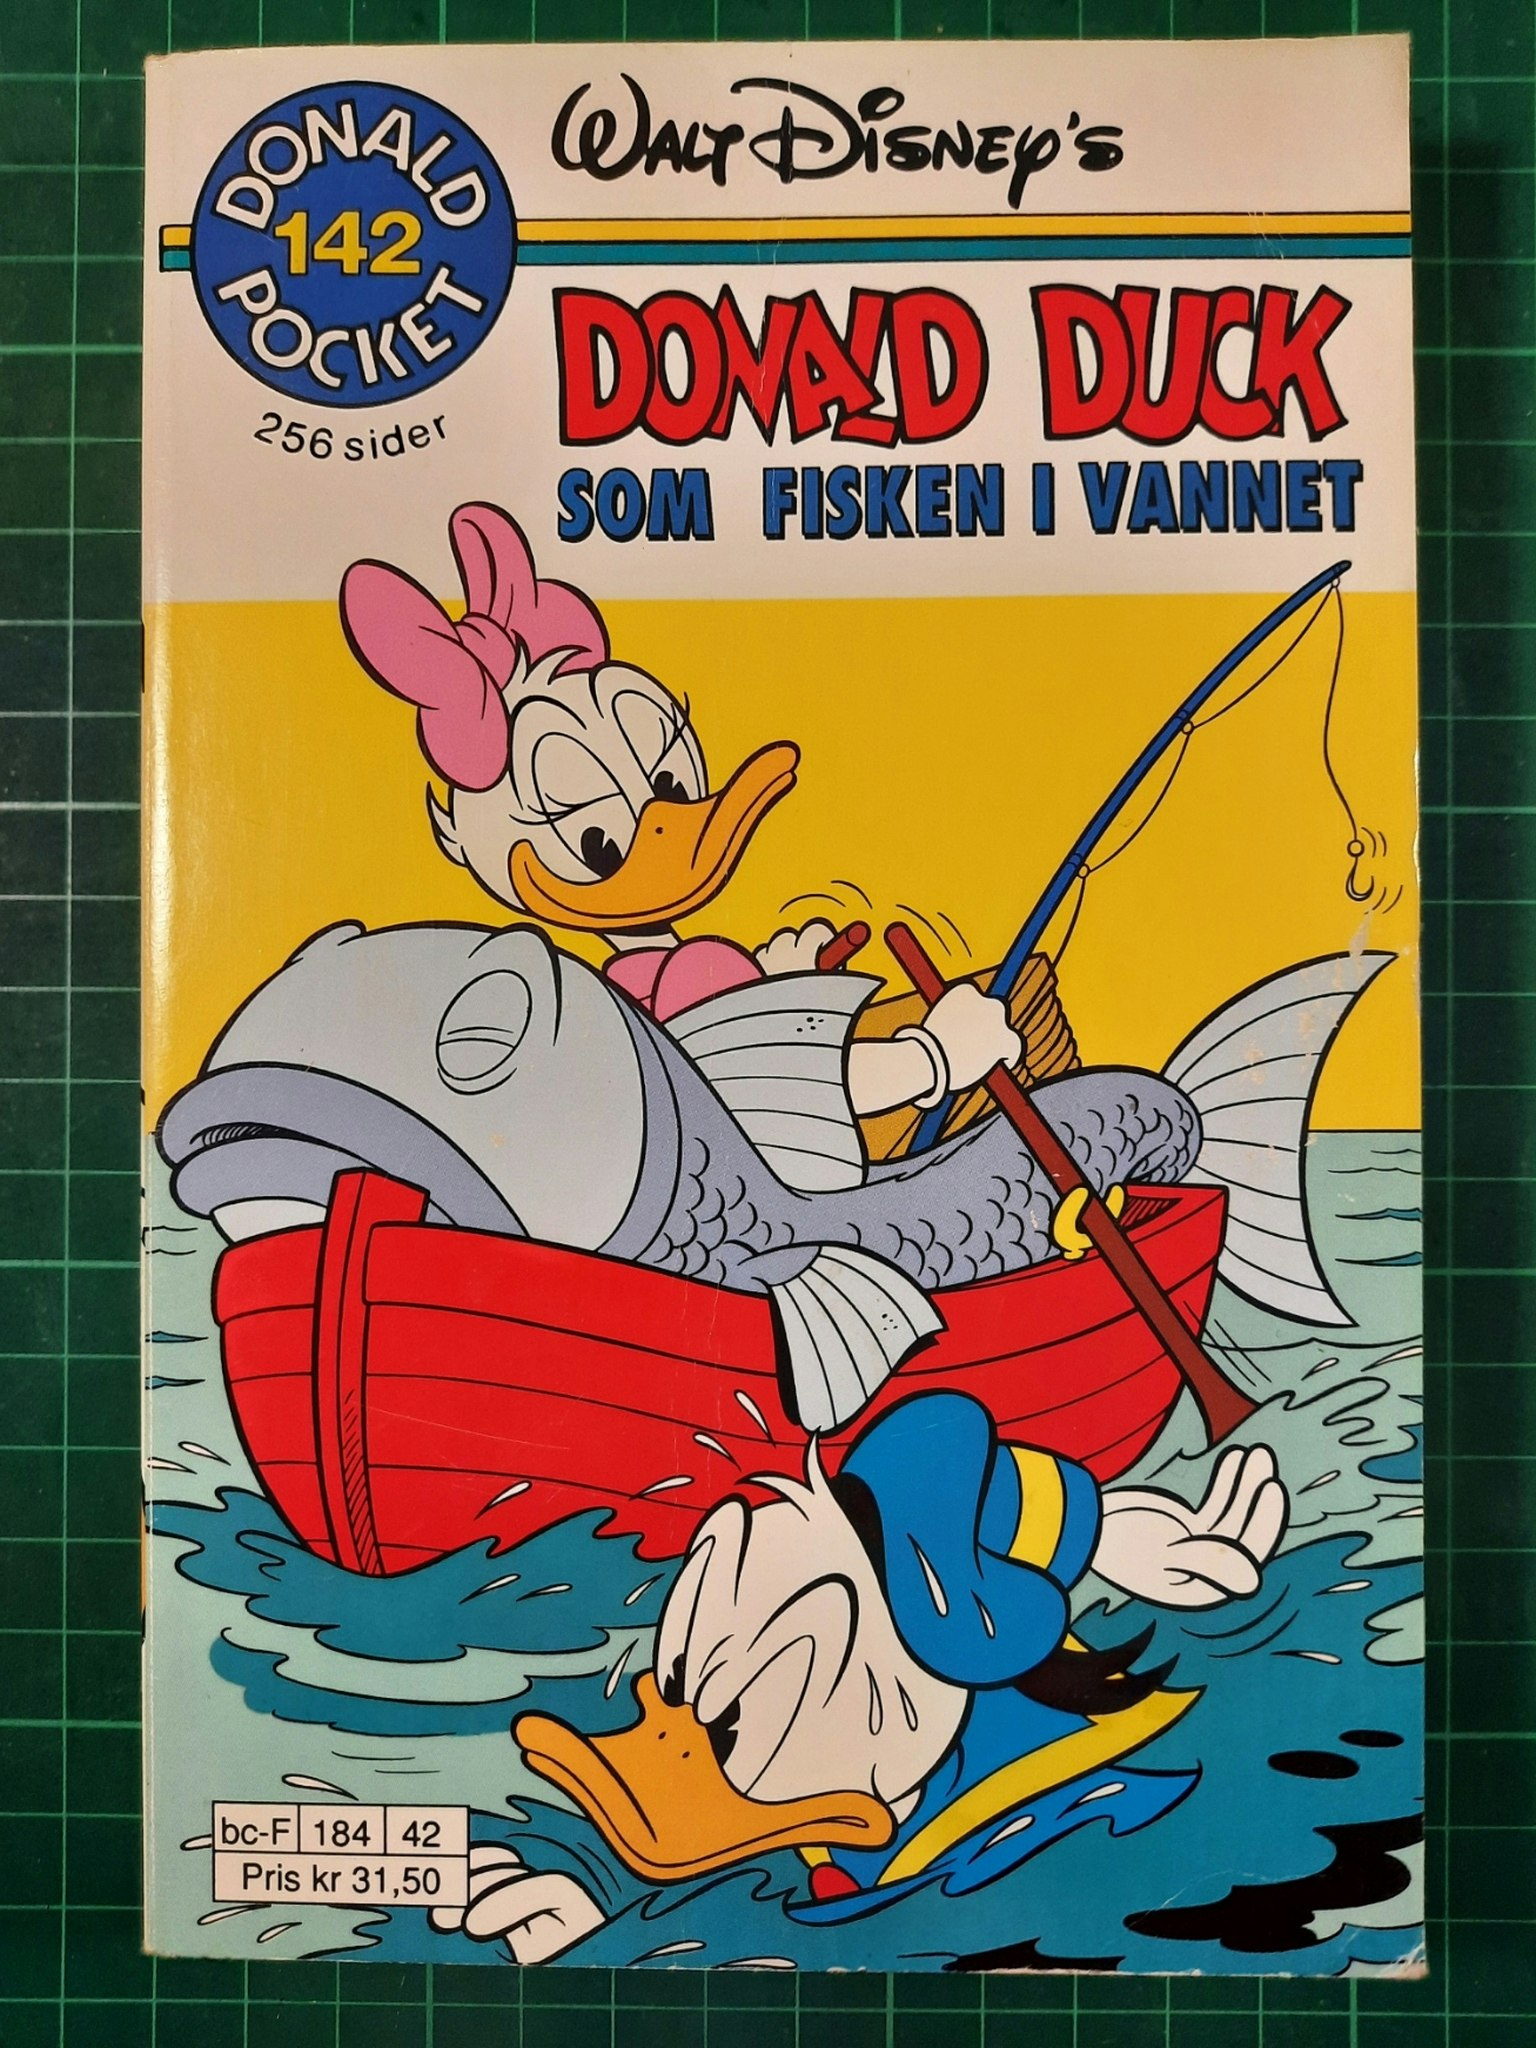 Donald Pocket 142